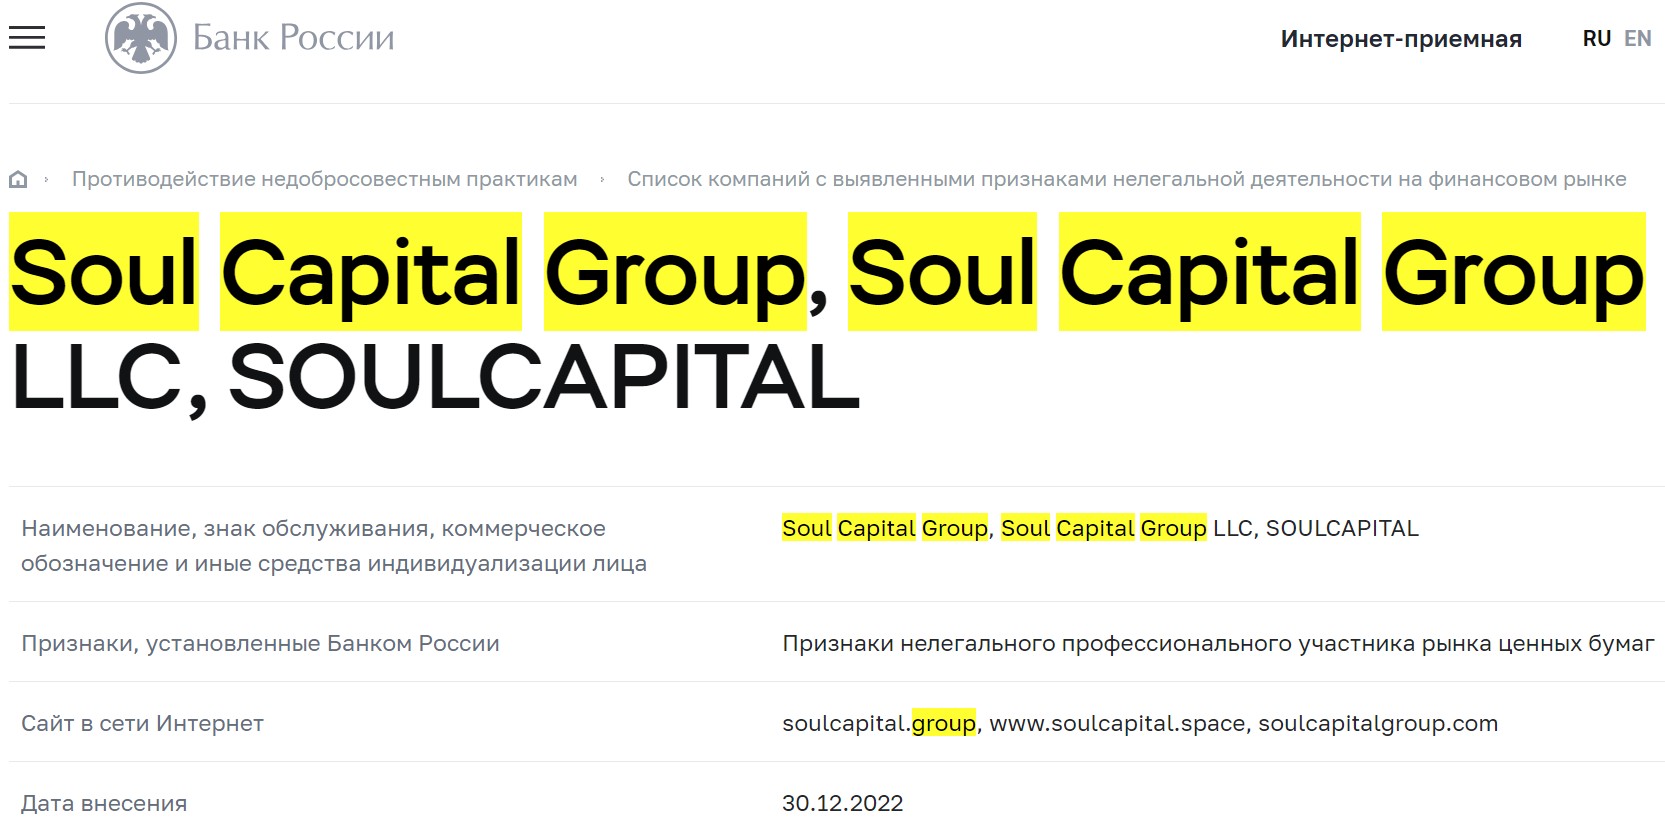 Soul Capital Group обзор проекта